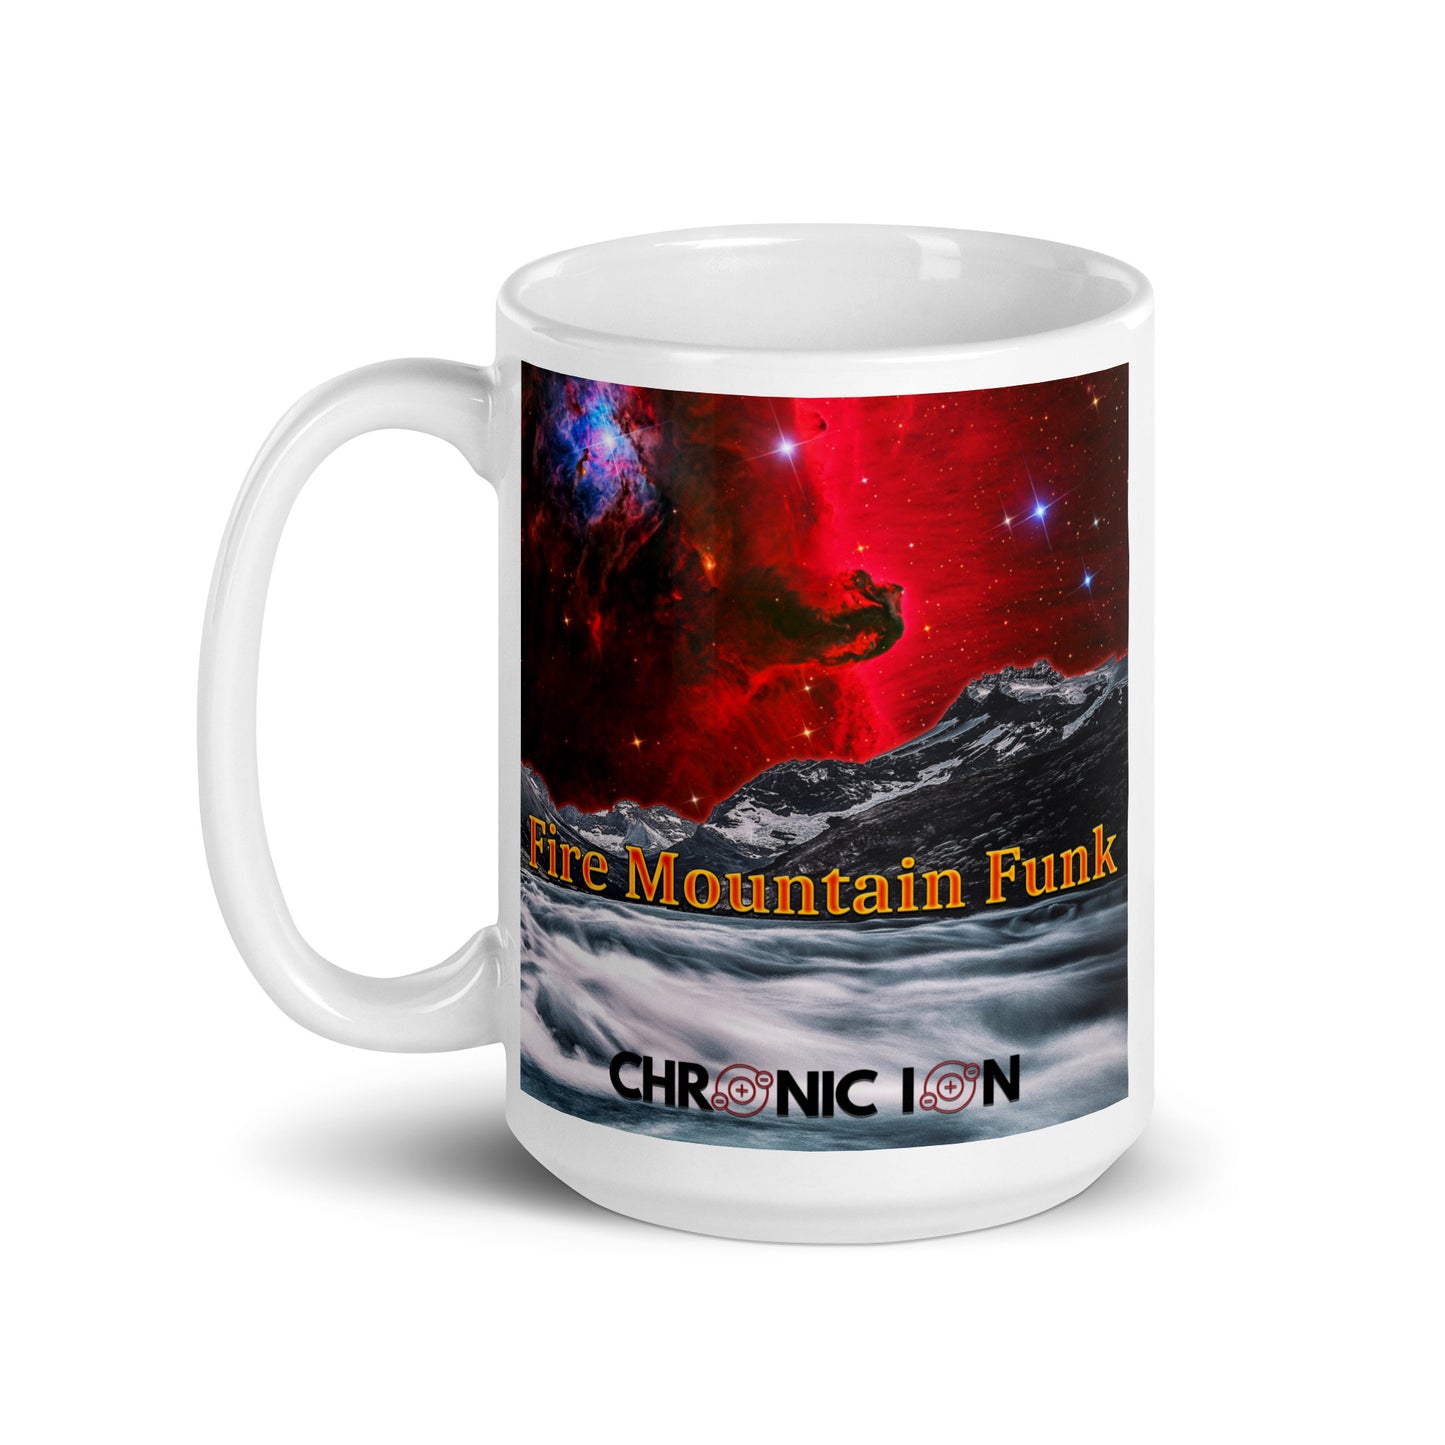 Chronic Ion - Fire Mountain Funk White Glossy Mug